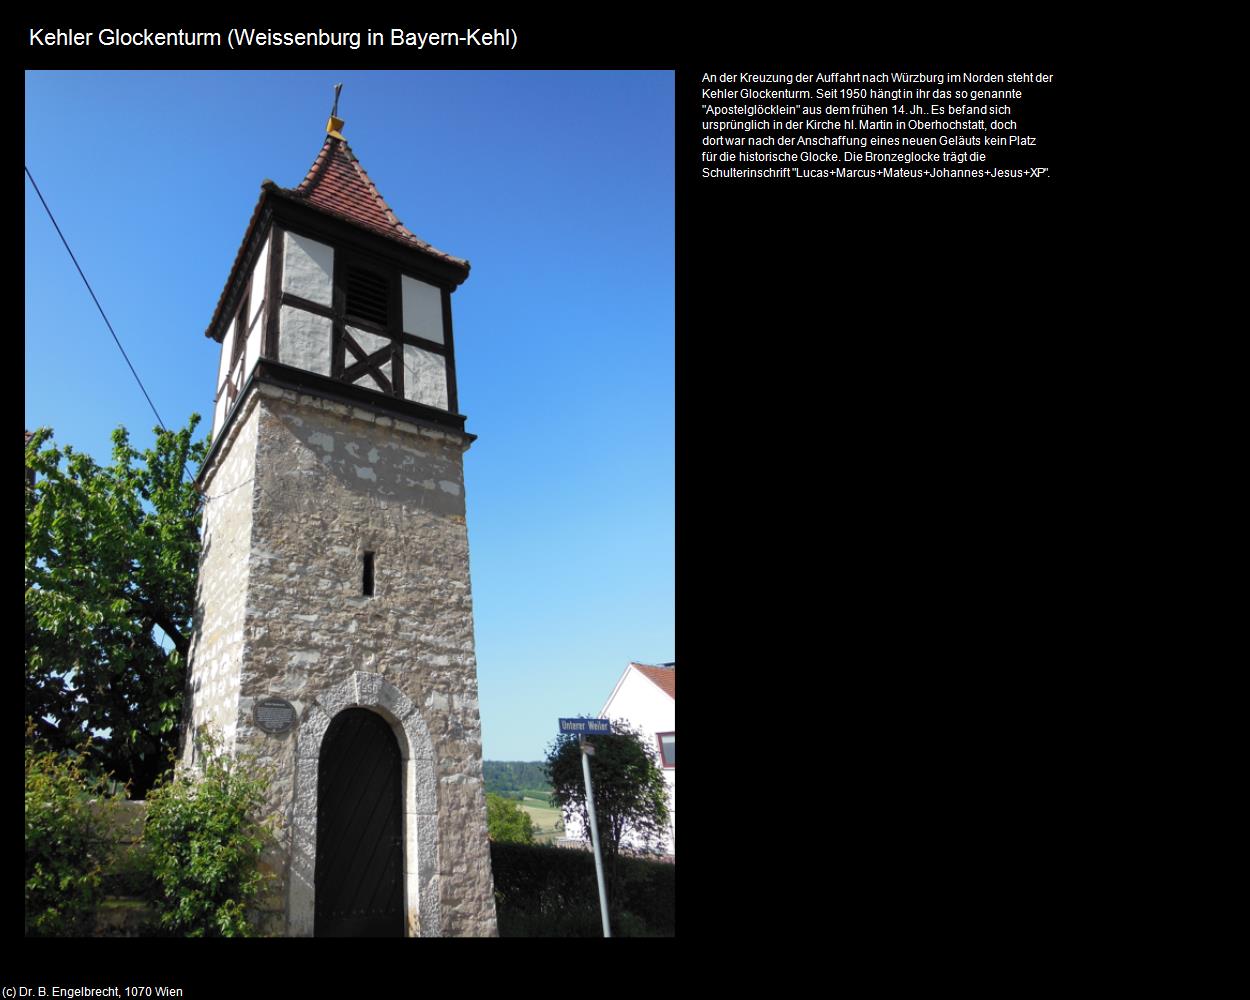 Glockenturm (Kehl) (Weissenburg in Bayern) in Kulturatlas-BAYERN